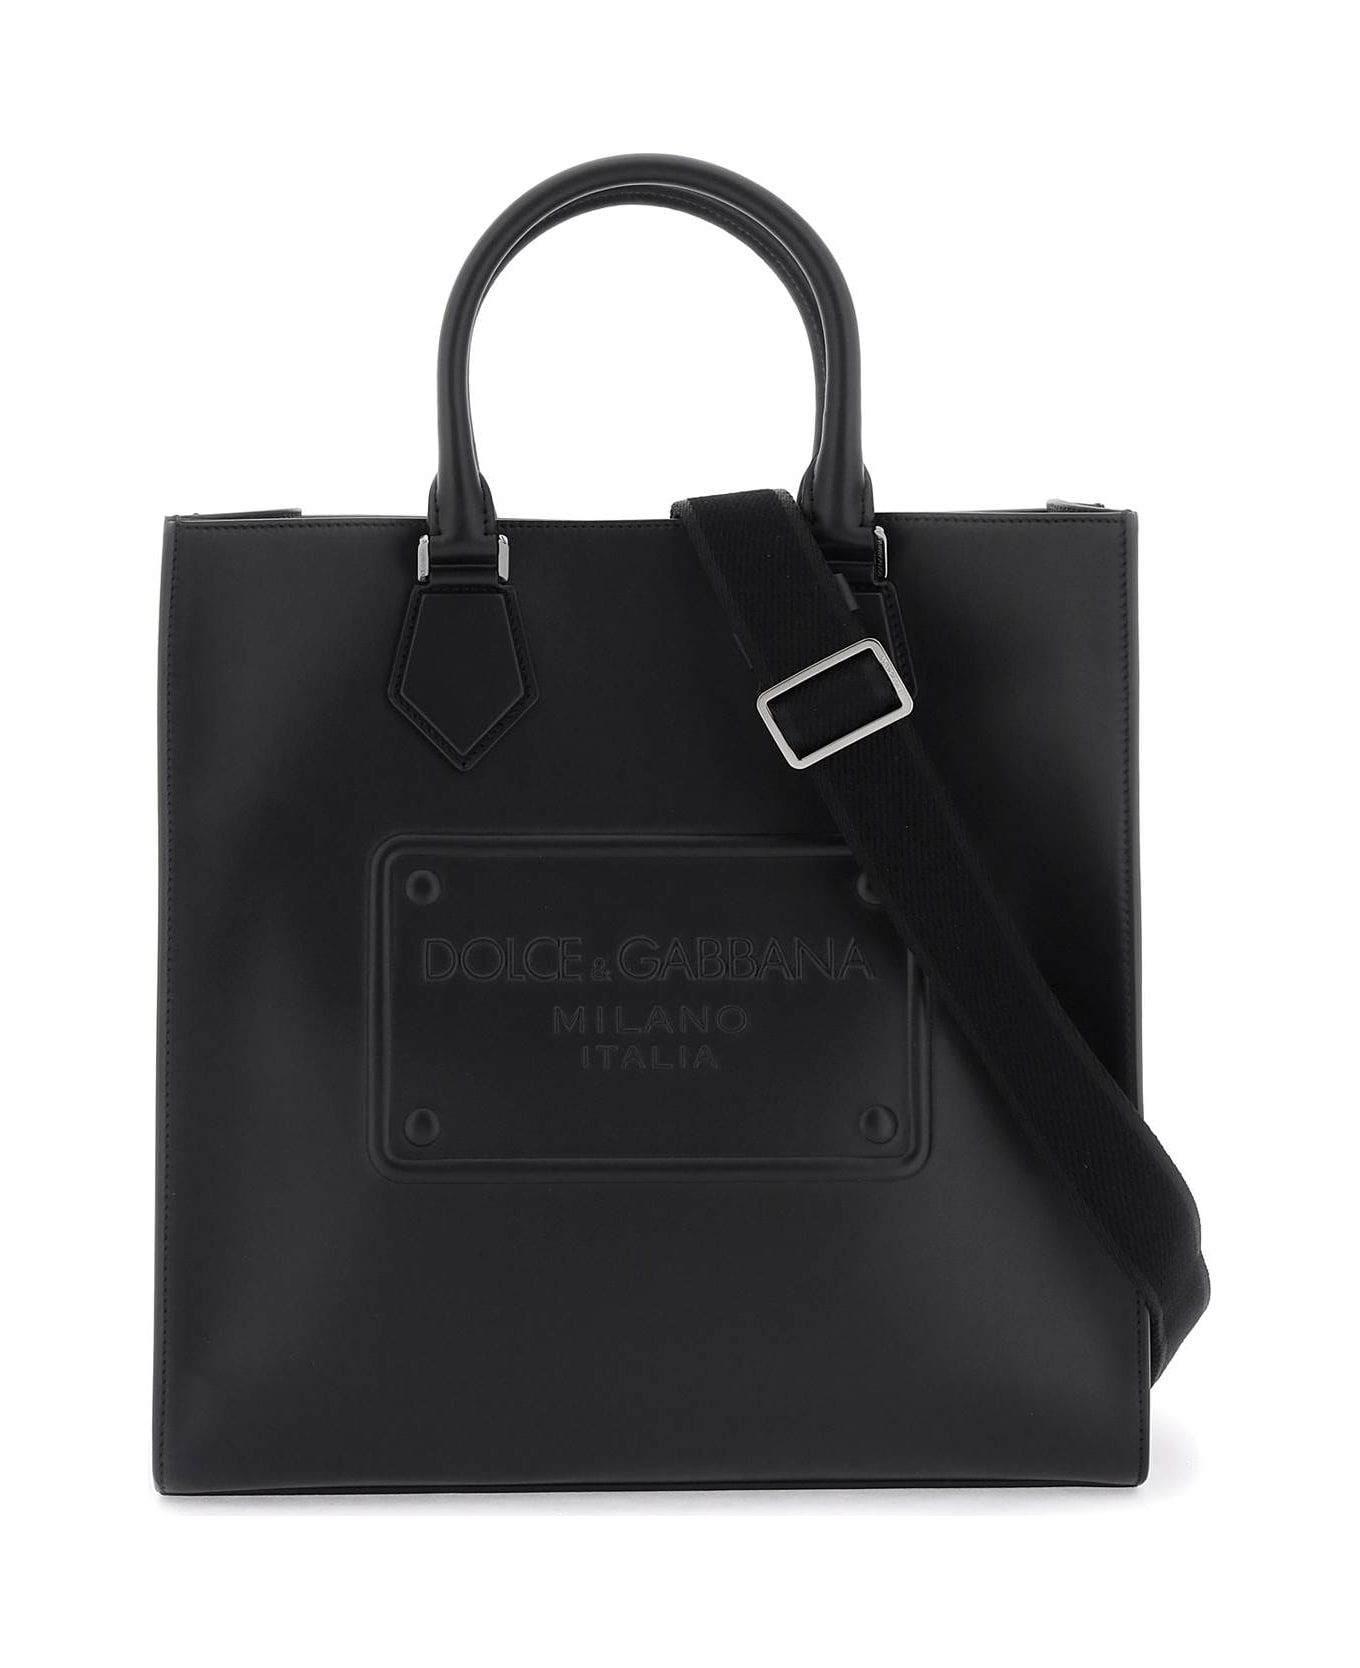 Dolce & Gabbana Black Leather Bag - Black